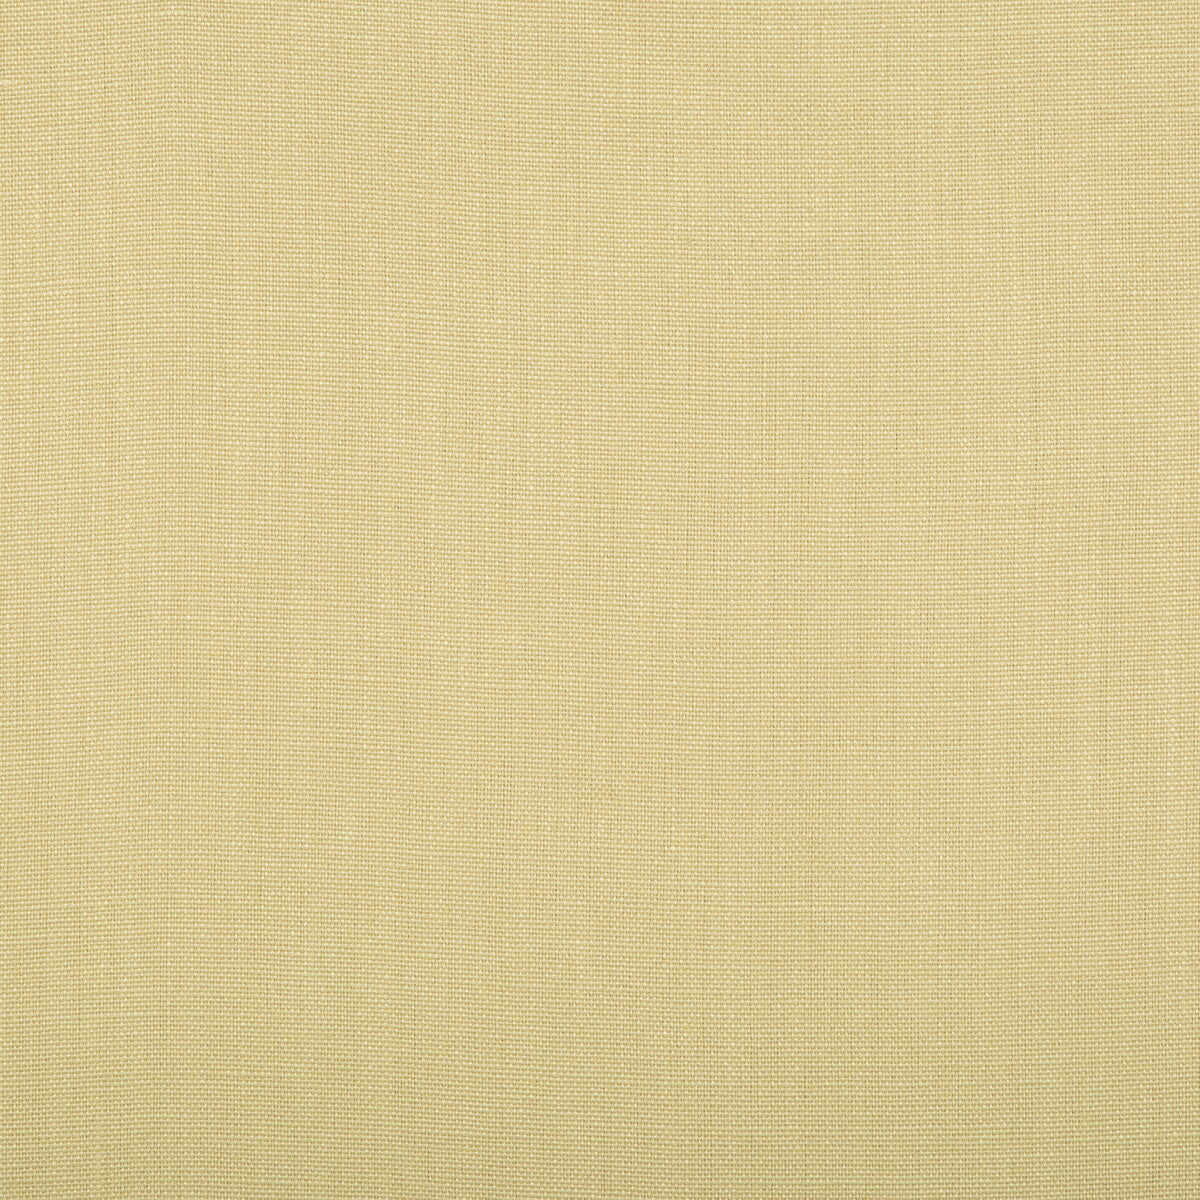 Hampton Linen fabric in oatmeal color - pattern 2012171.416.0 - by Lee Jofa